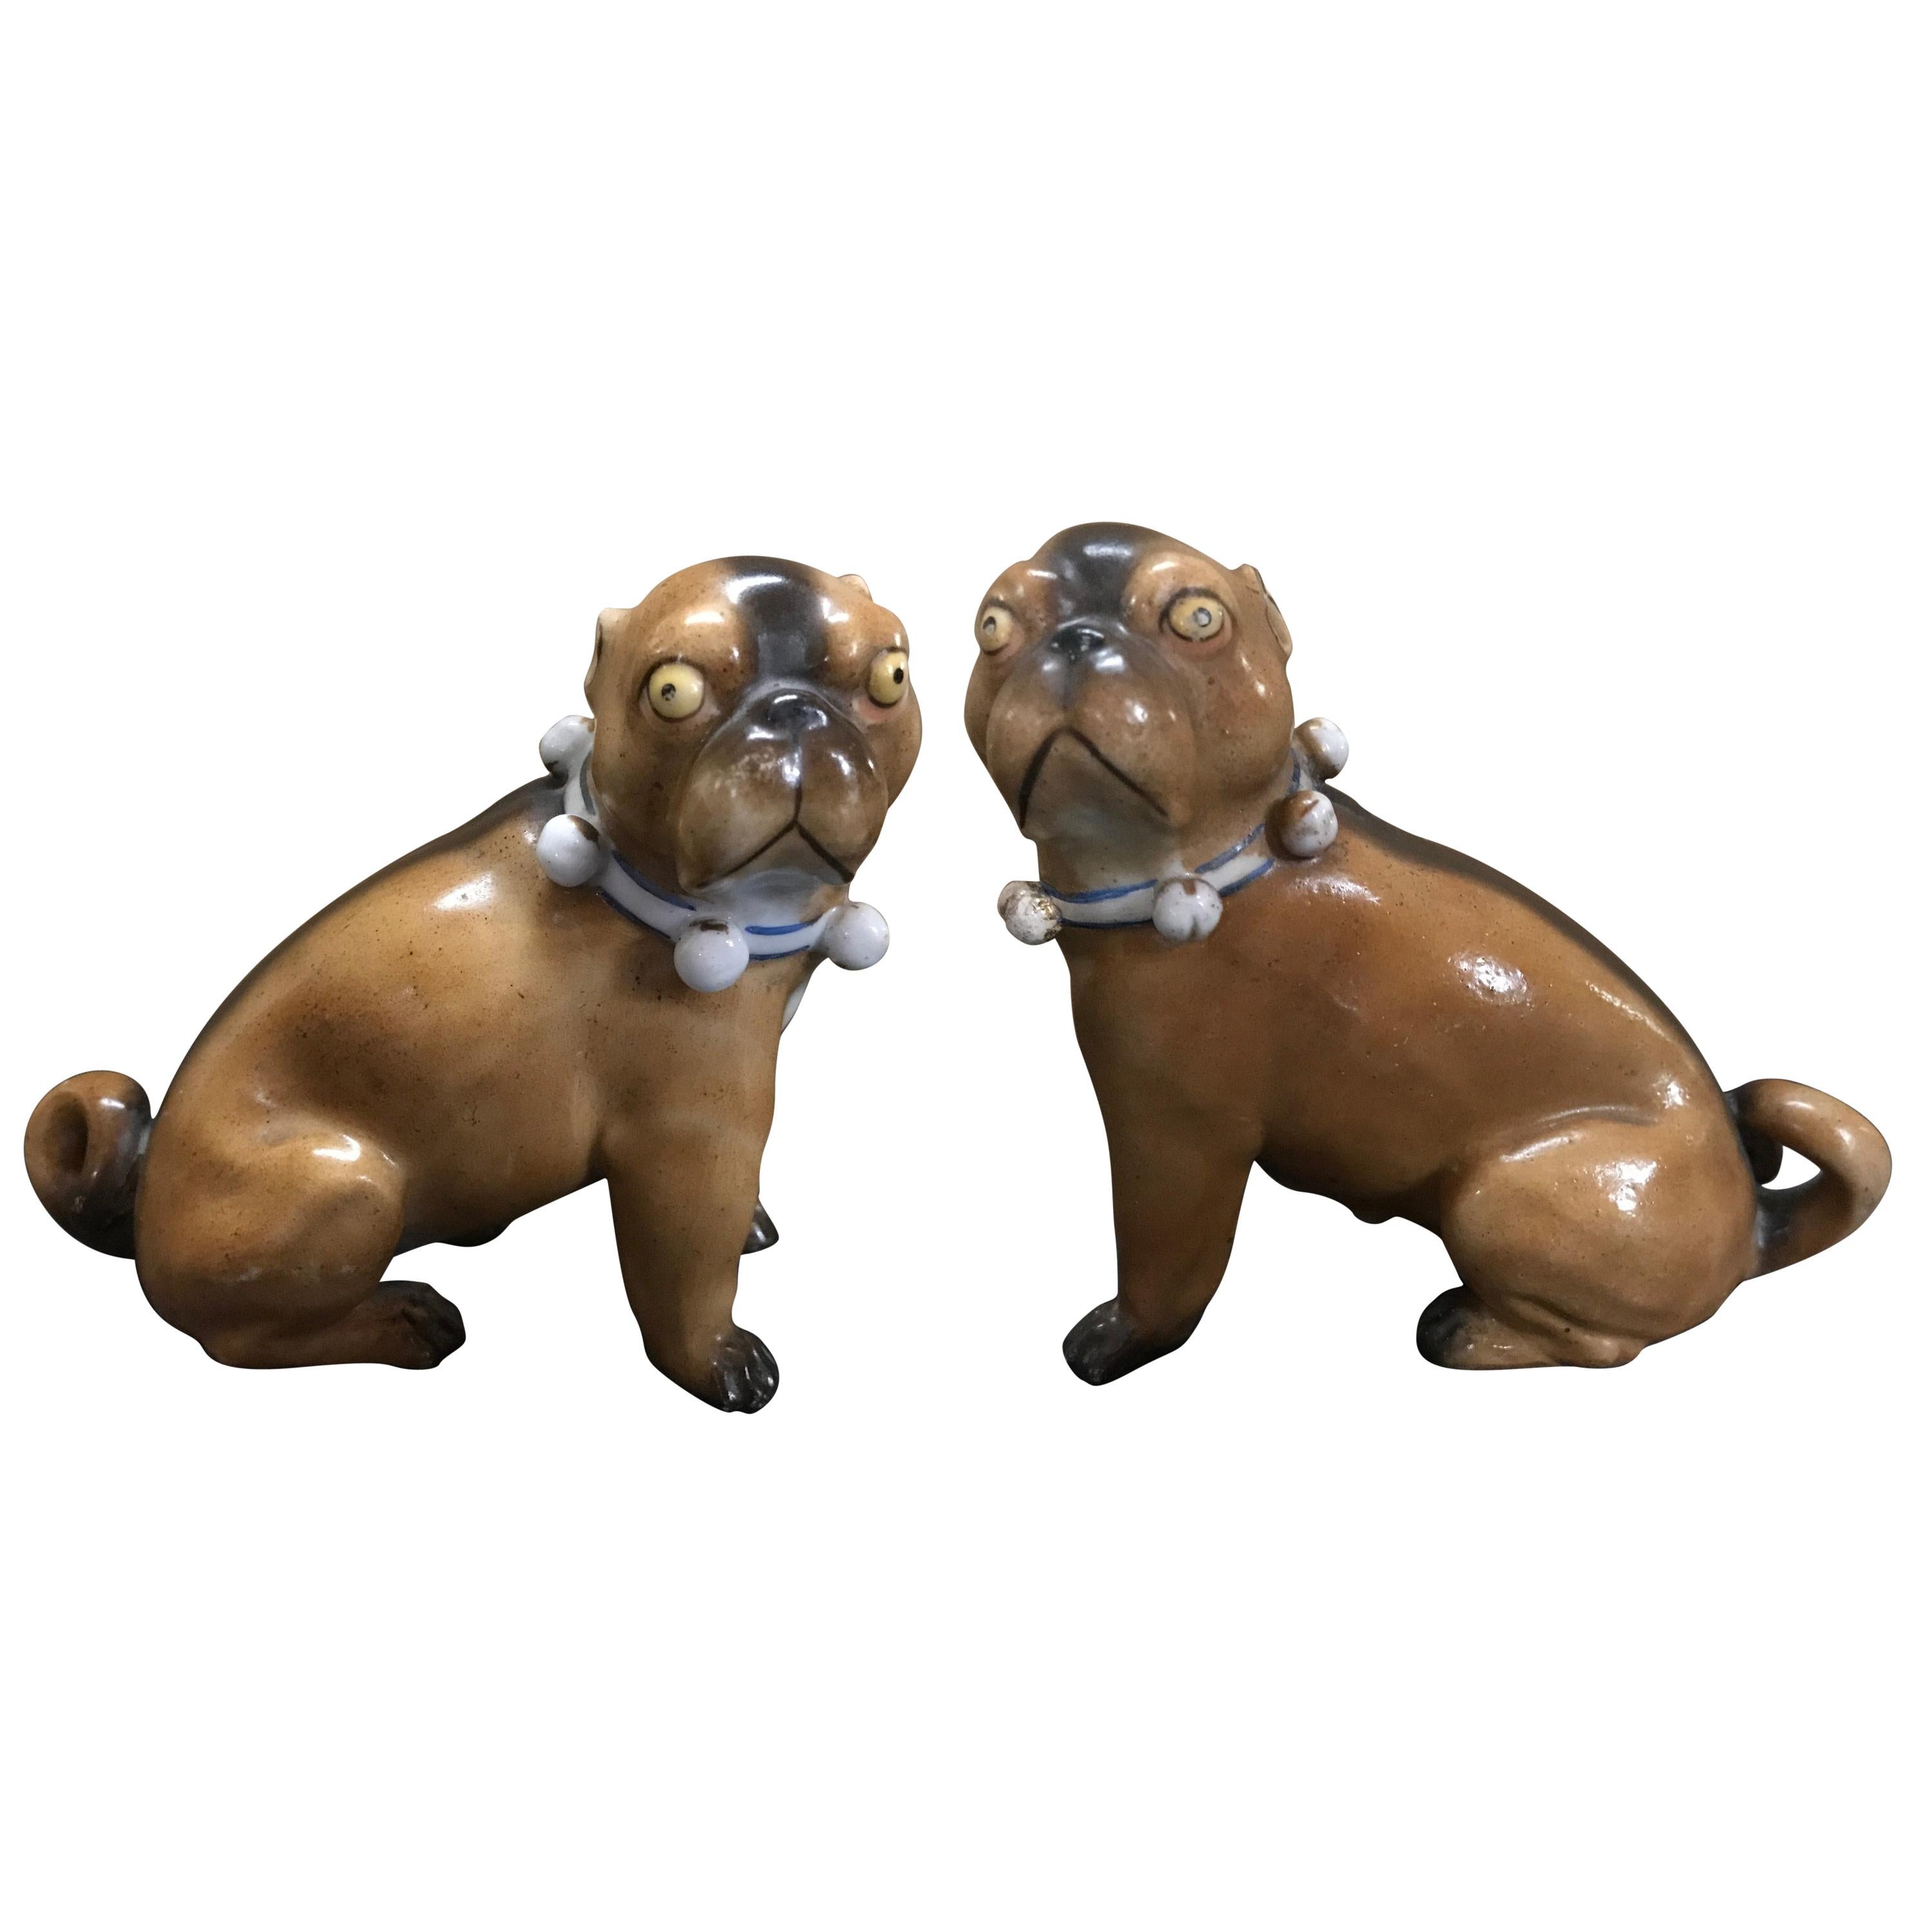 Pair of Antique German Porcelain Pug Dogs For Sale